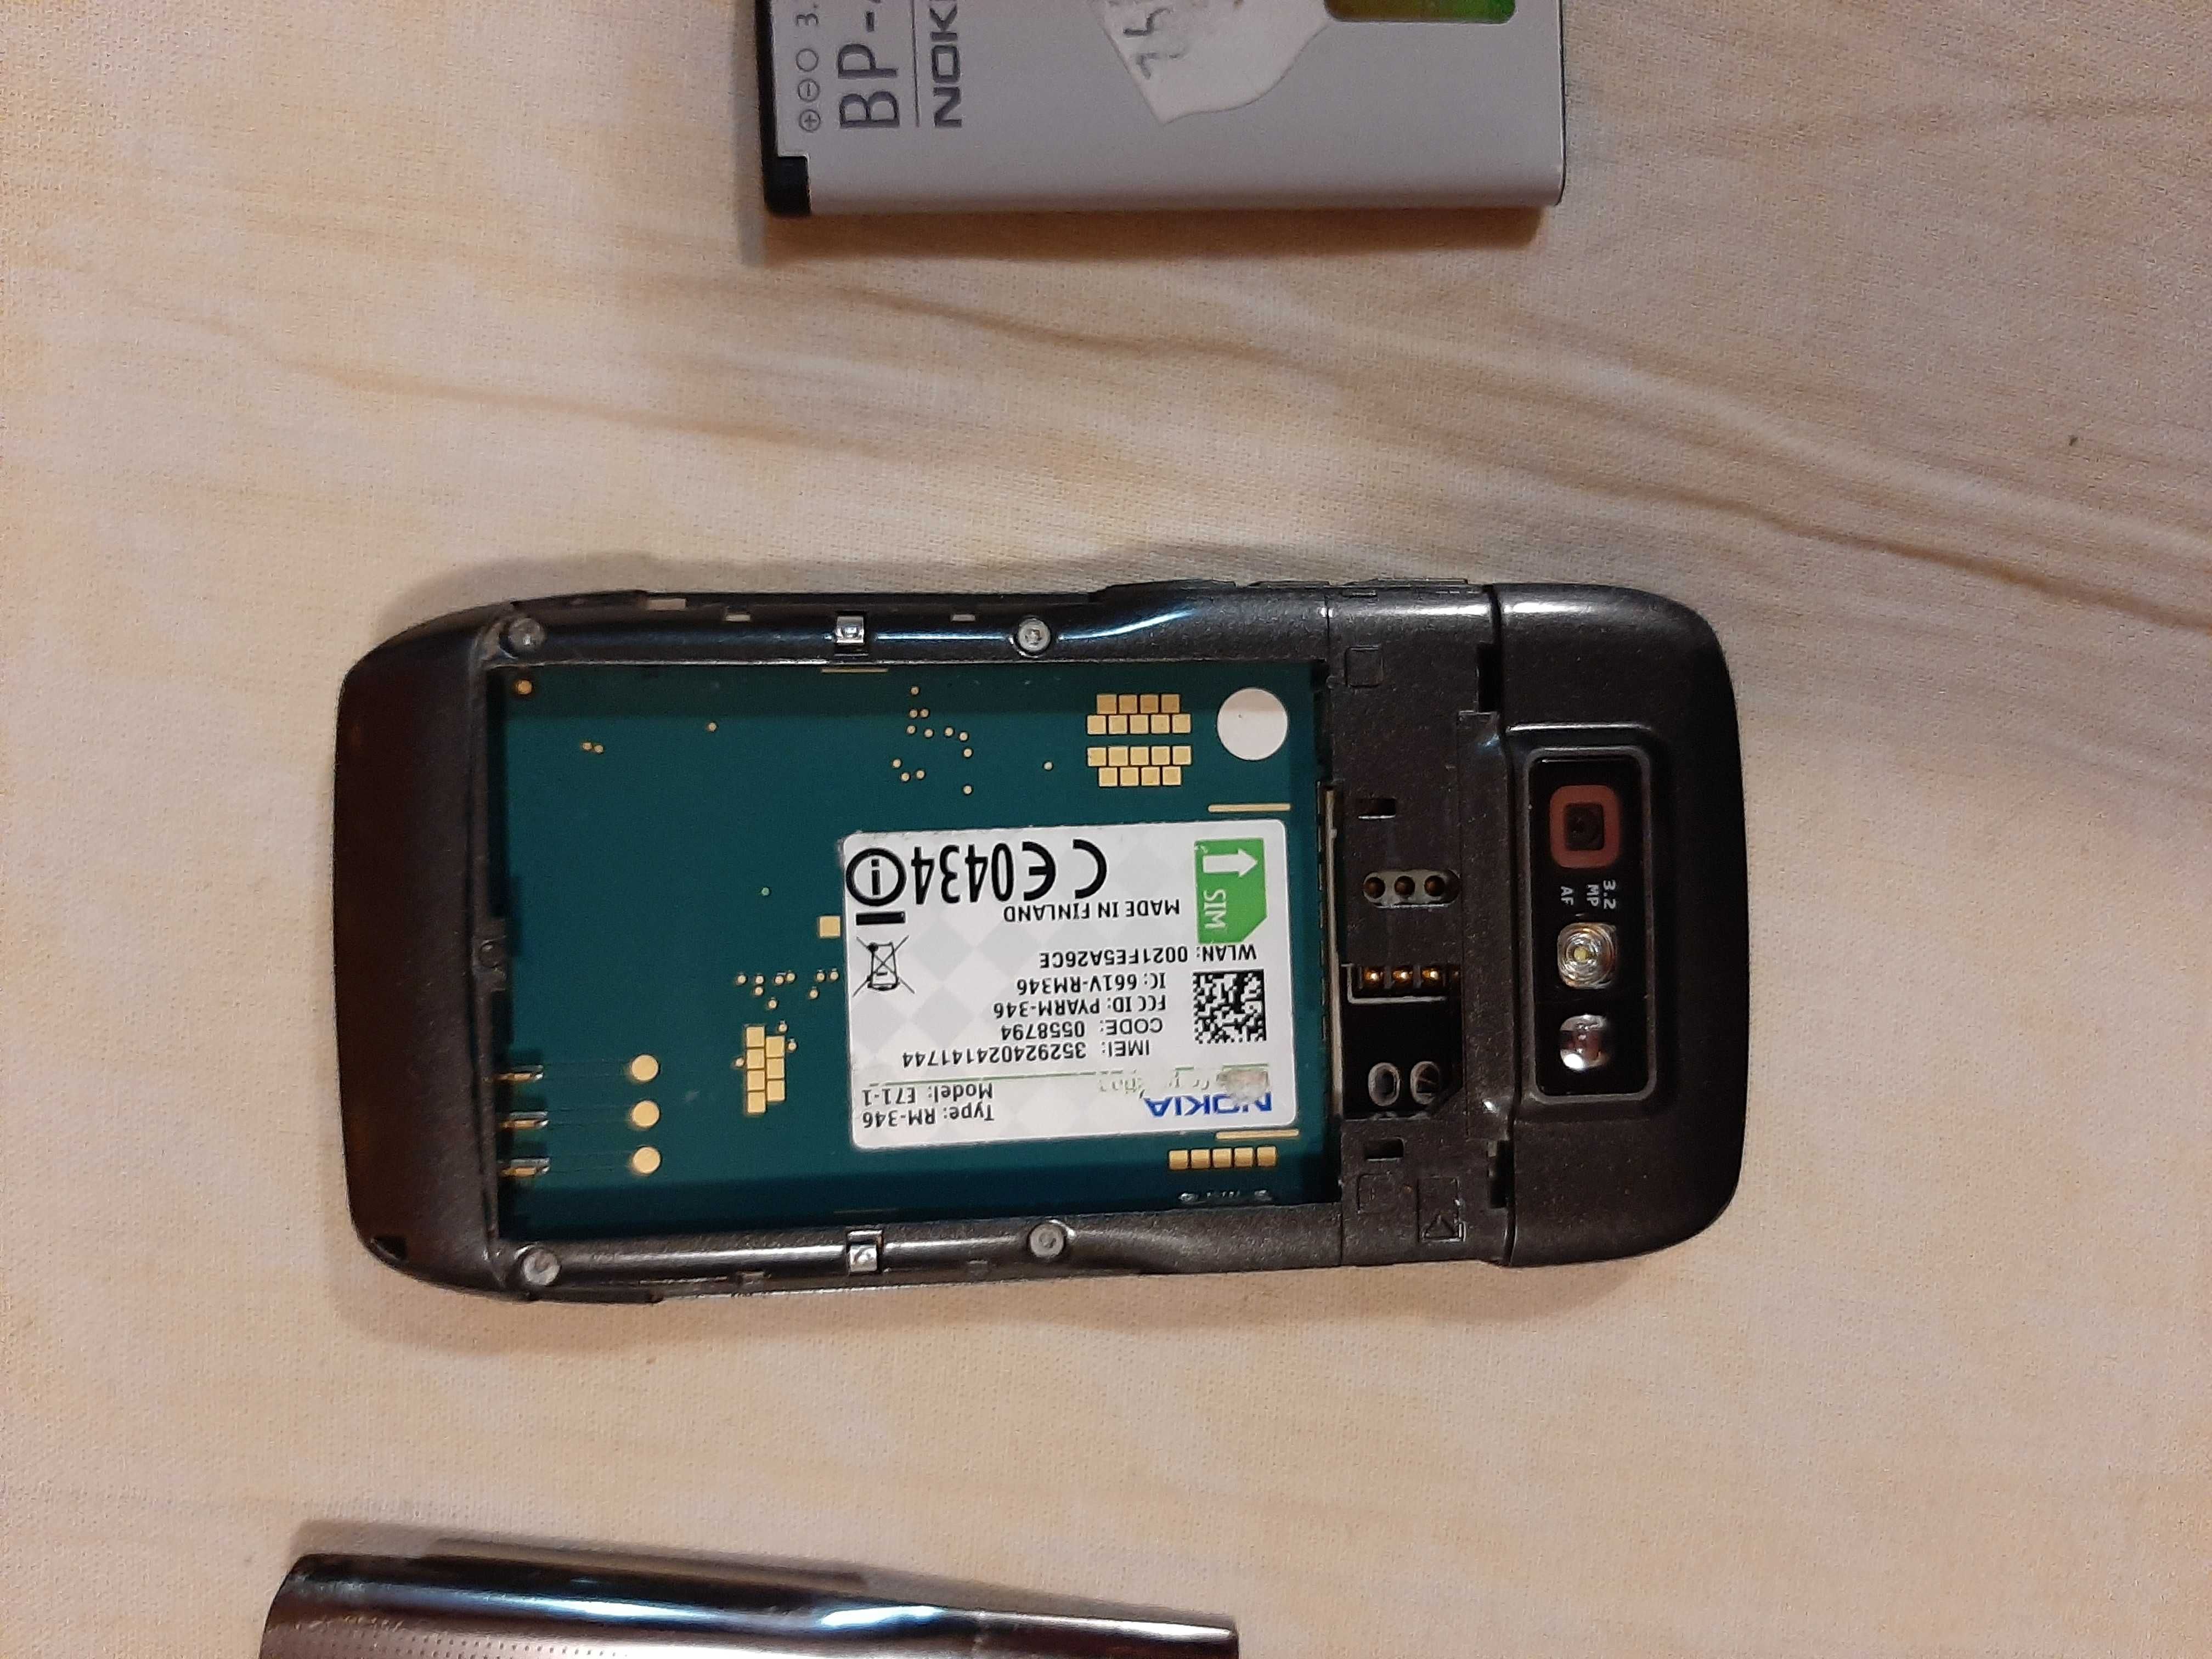 Vand telefoane vechi Samsung SGH-A167, Nokia E71 si Nokia 2330c